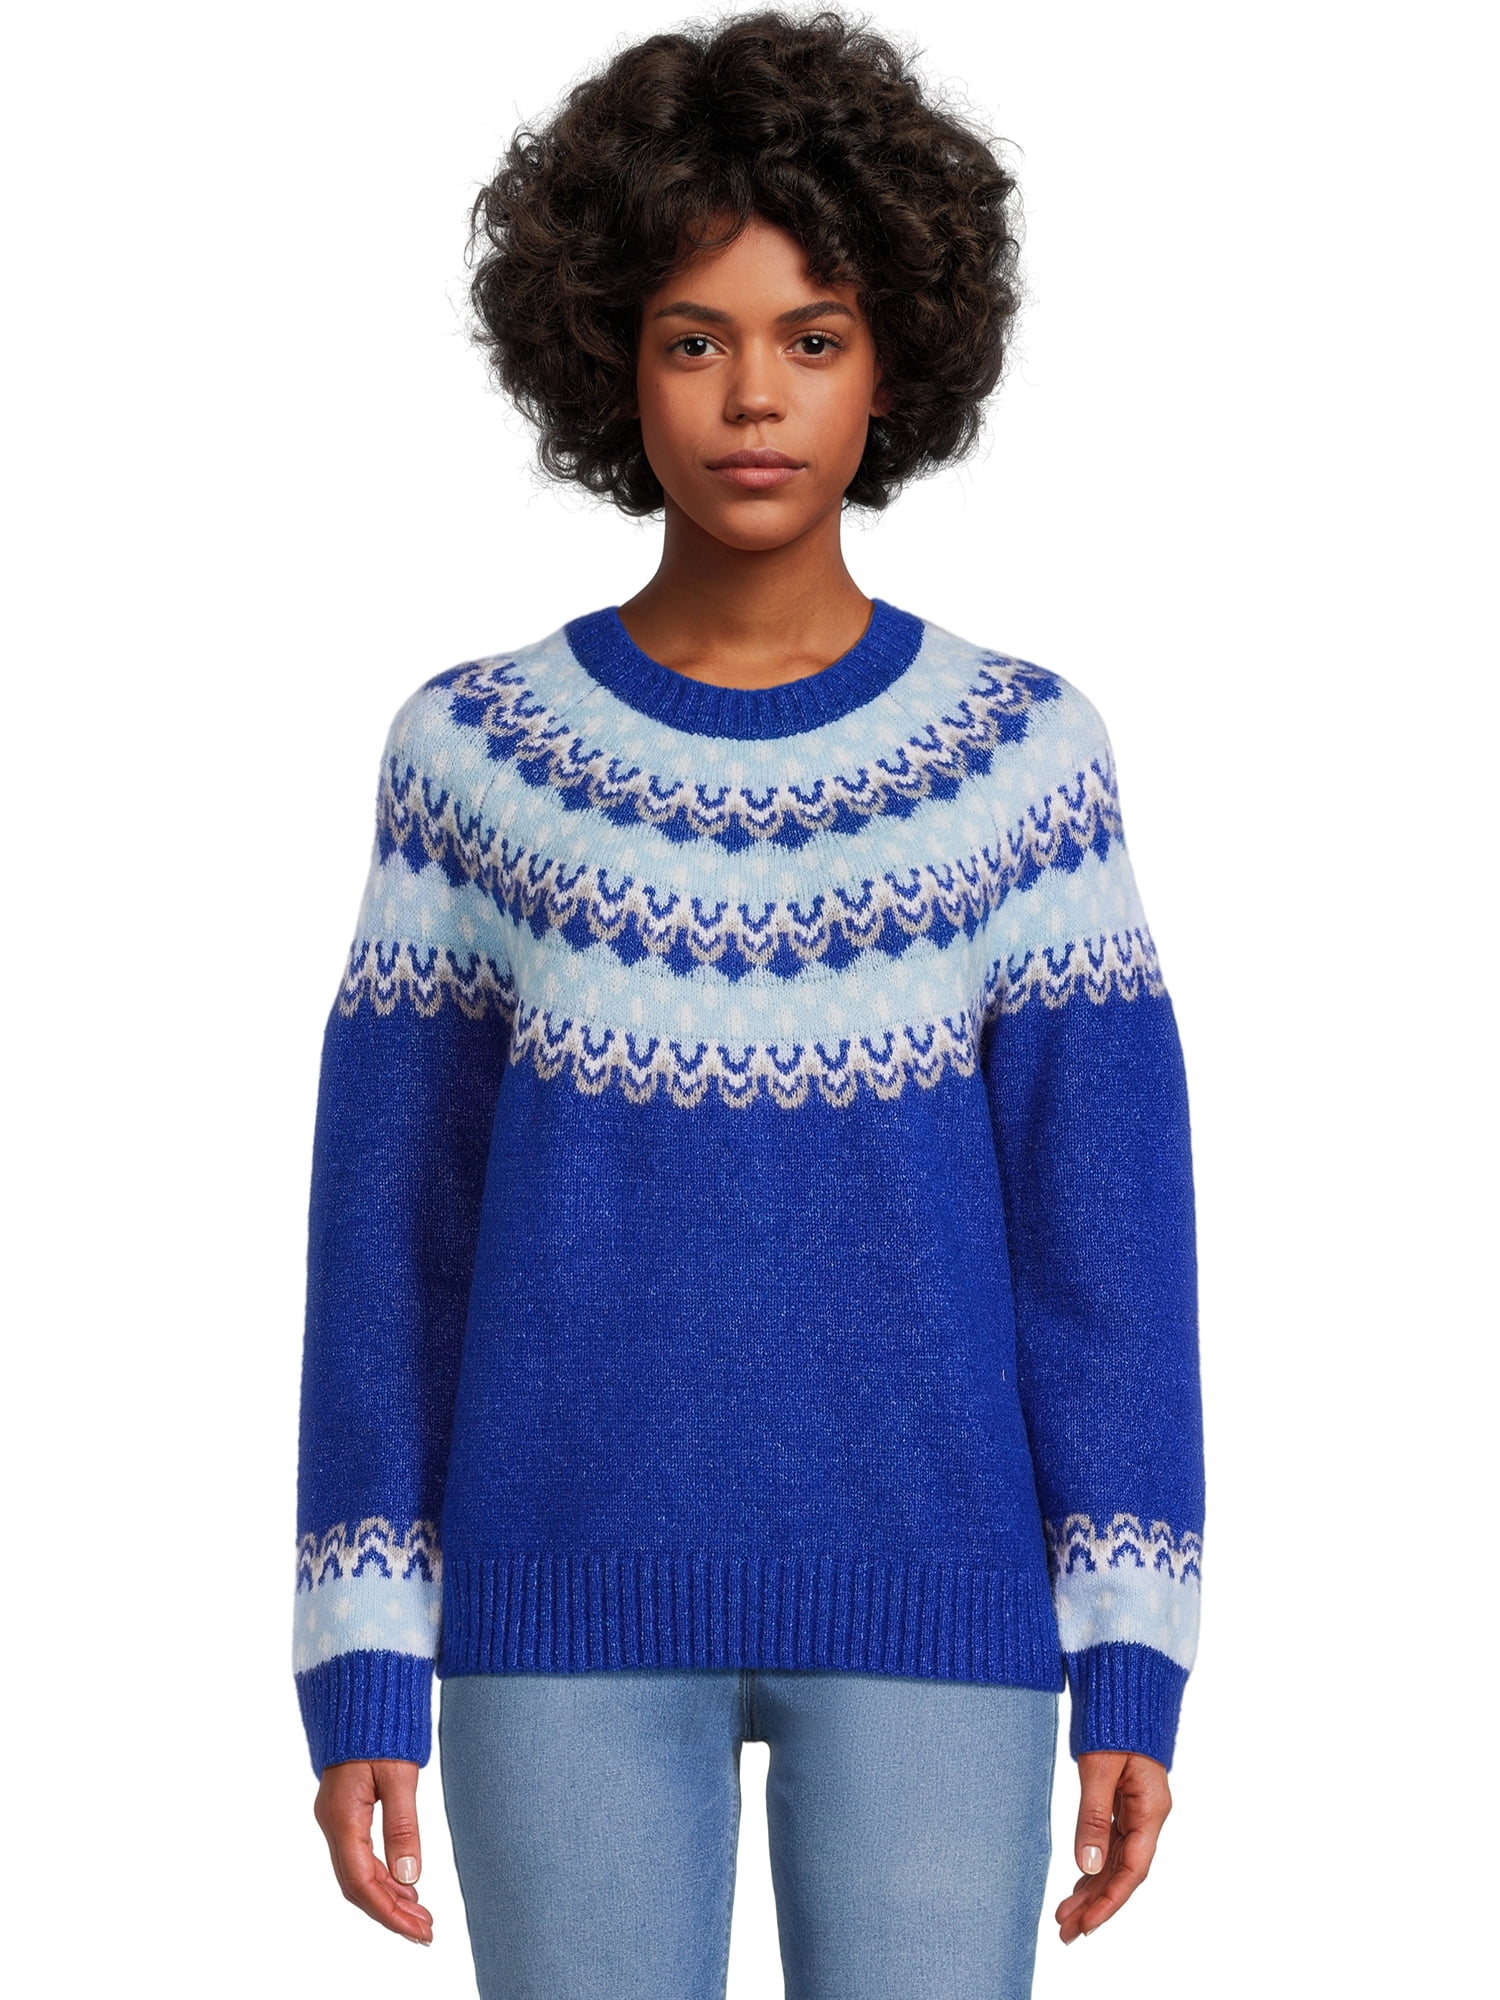 99 Jane Street Women's Crewneck Pullover Sweater with Long Raglan ...